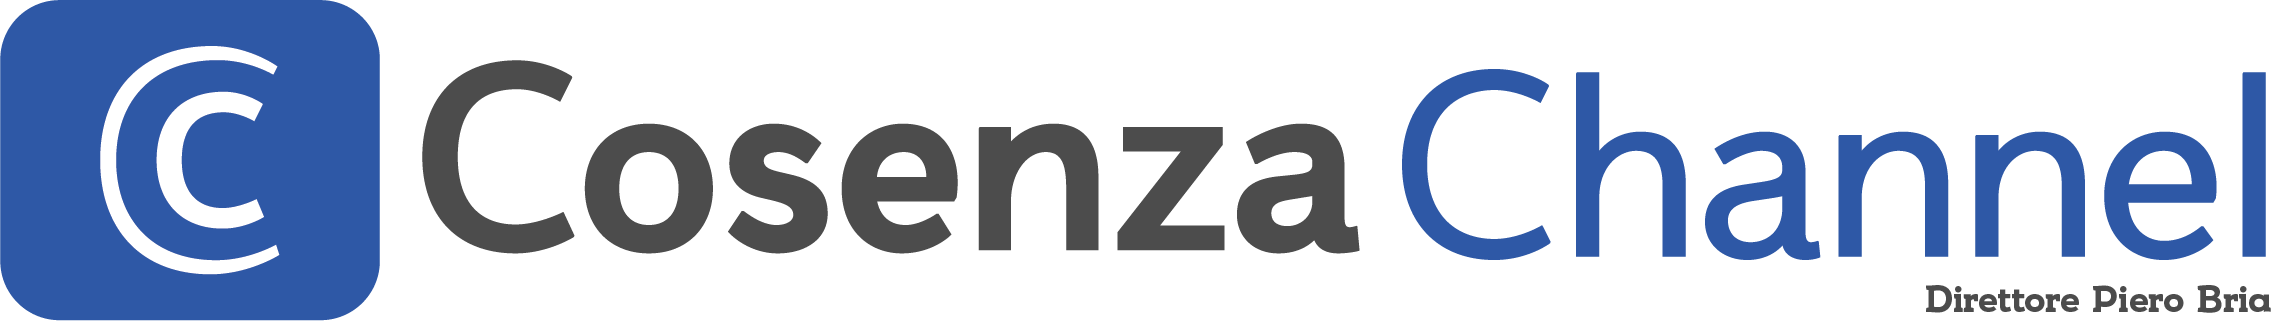 cosenza channel logo